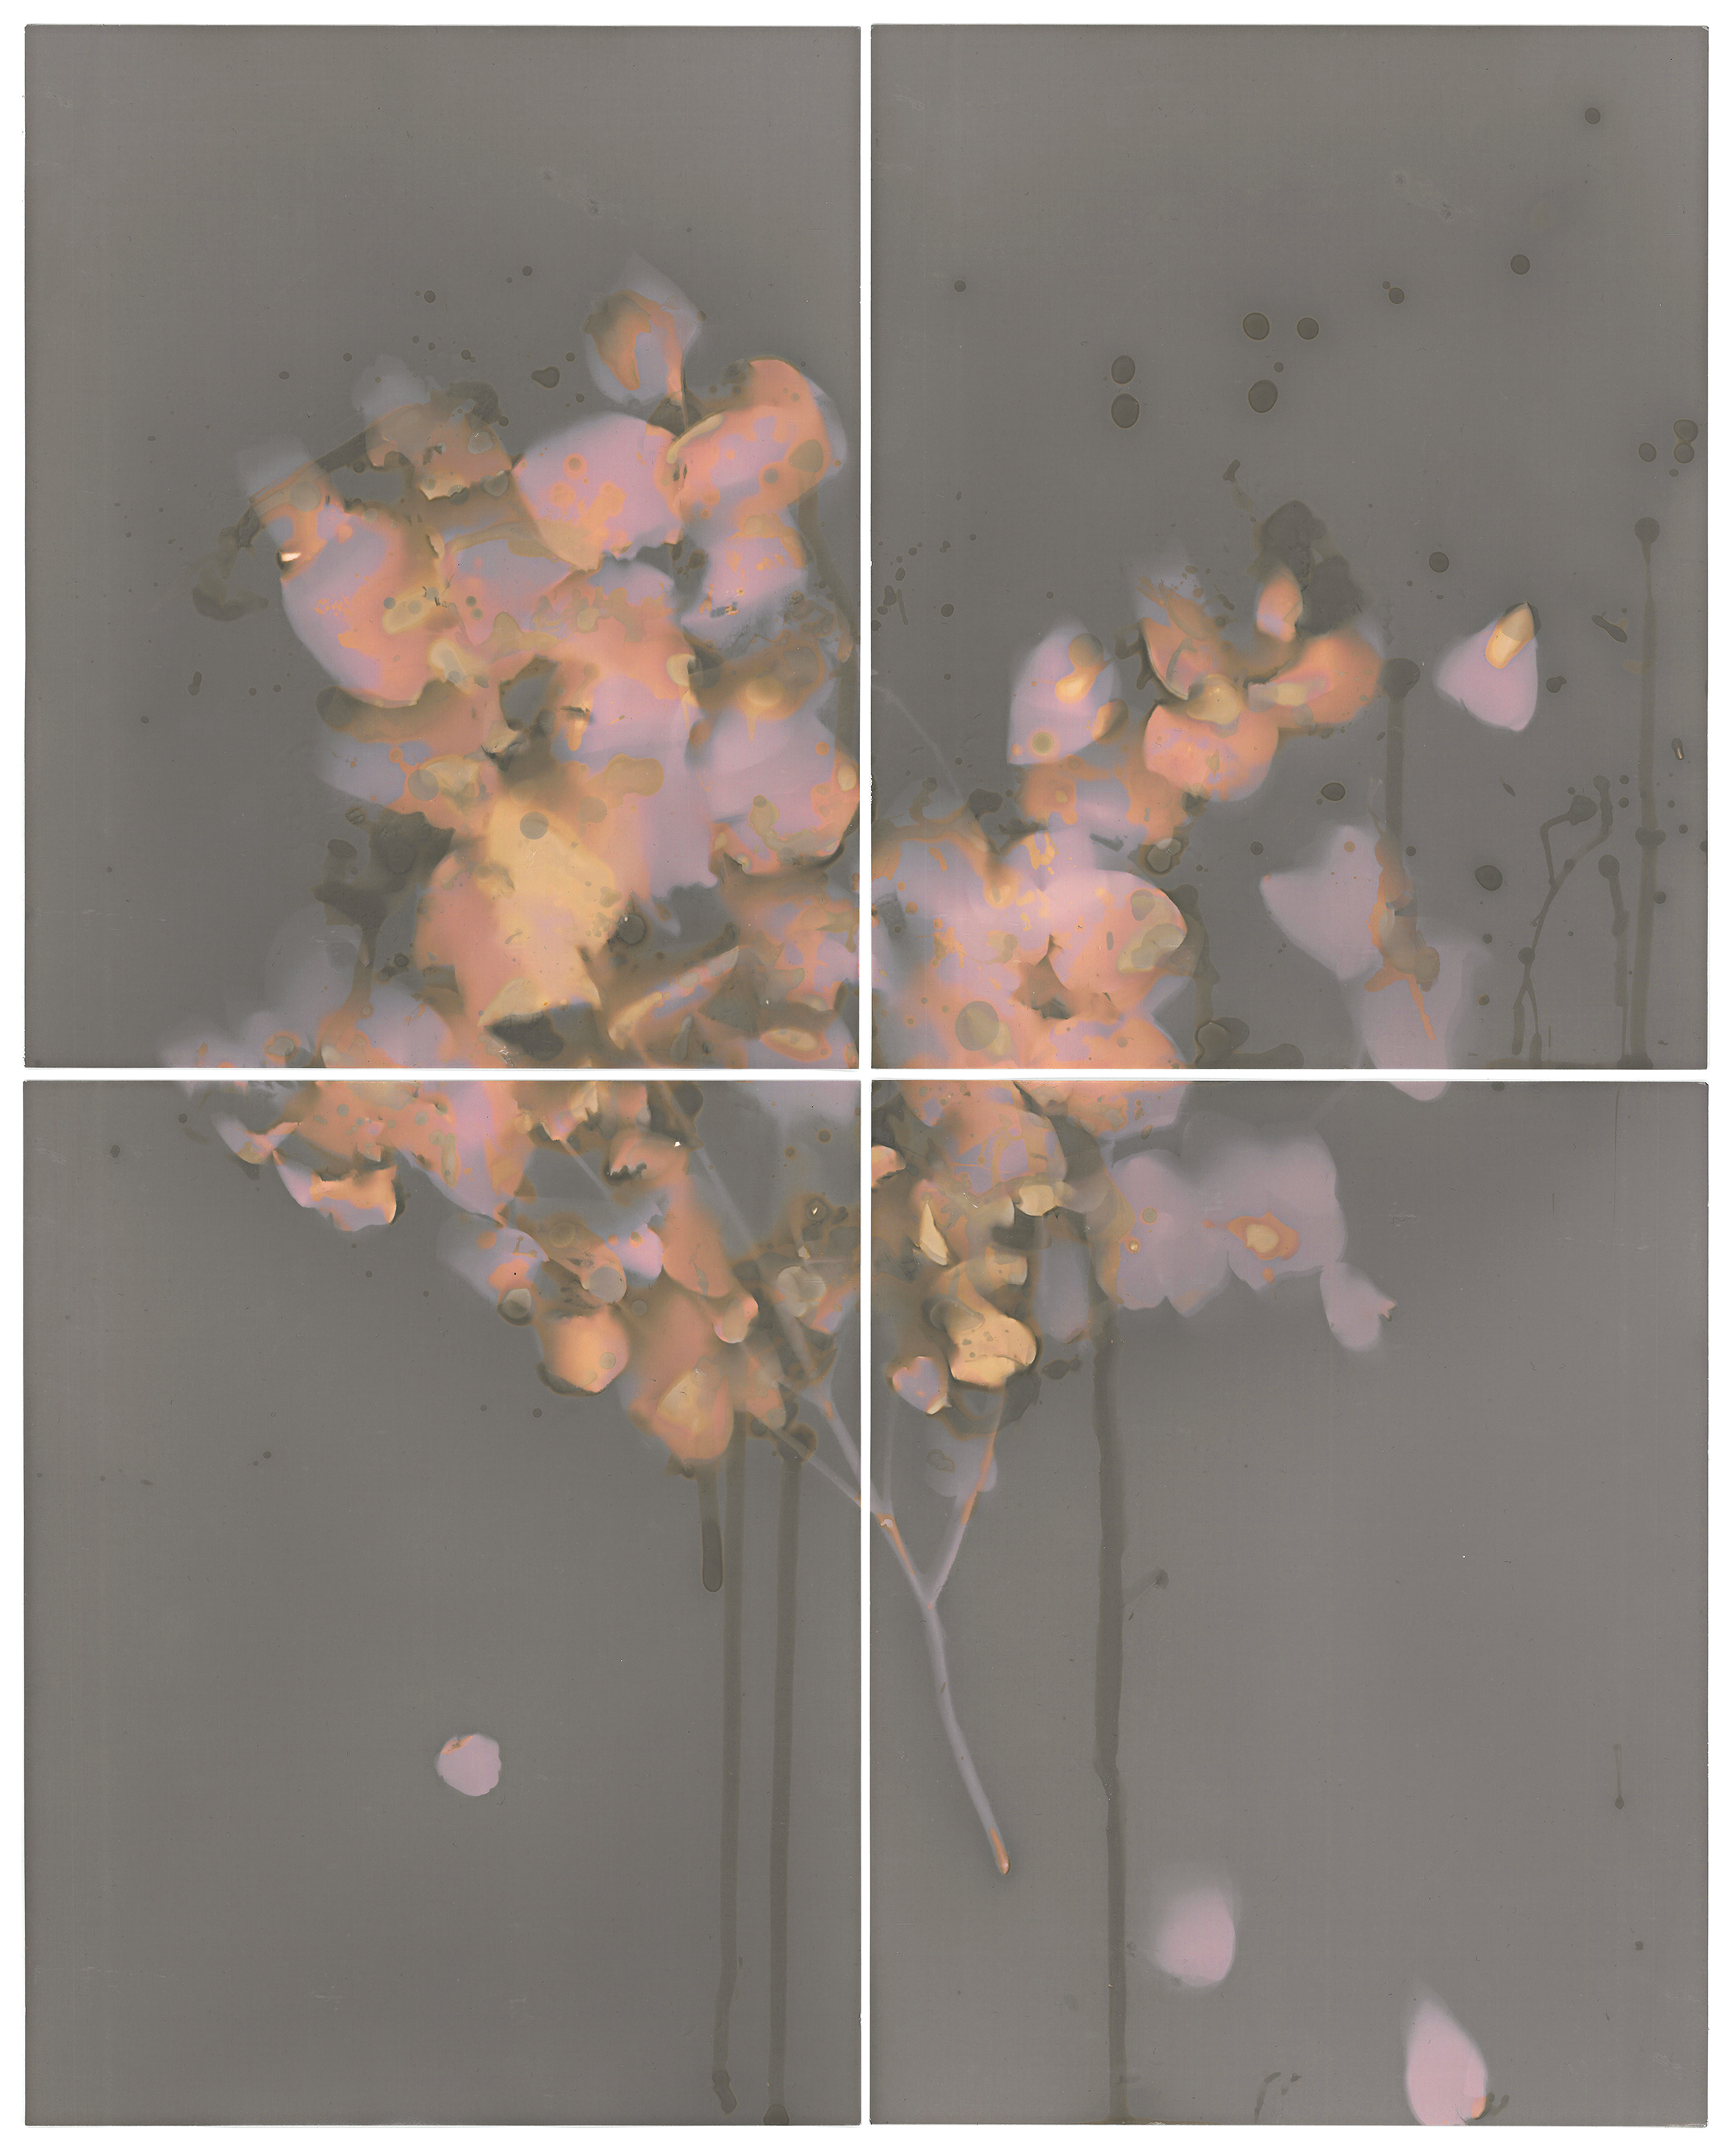  Stephanie Richter  Untitled (backyard lumen experiment 6 - Eucalyptus branch)&nbsp; &nbsp;2017 two gelatin silver prints 20.3 x 50.8 cm 